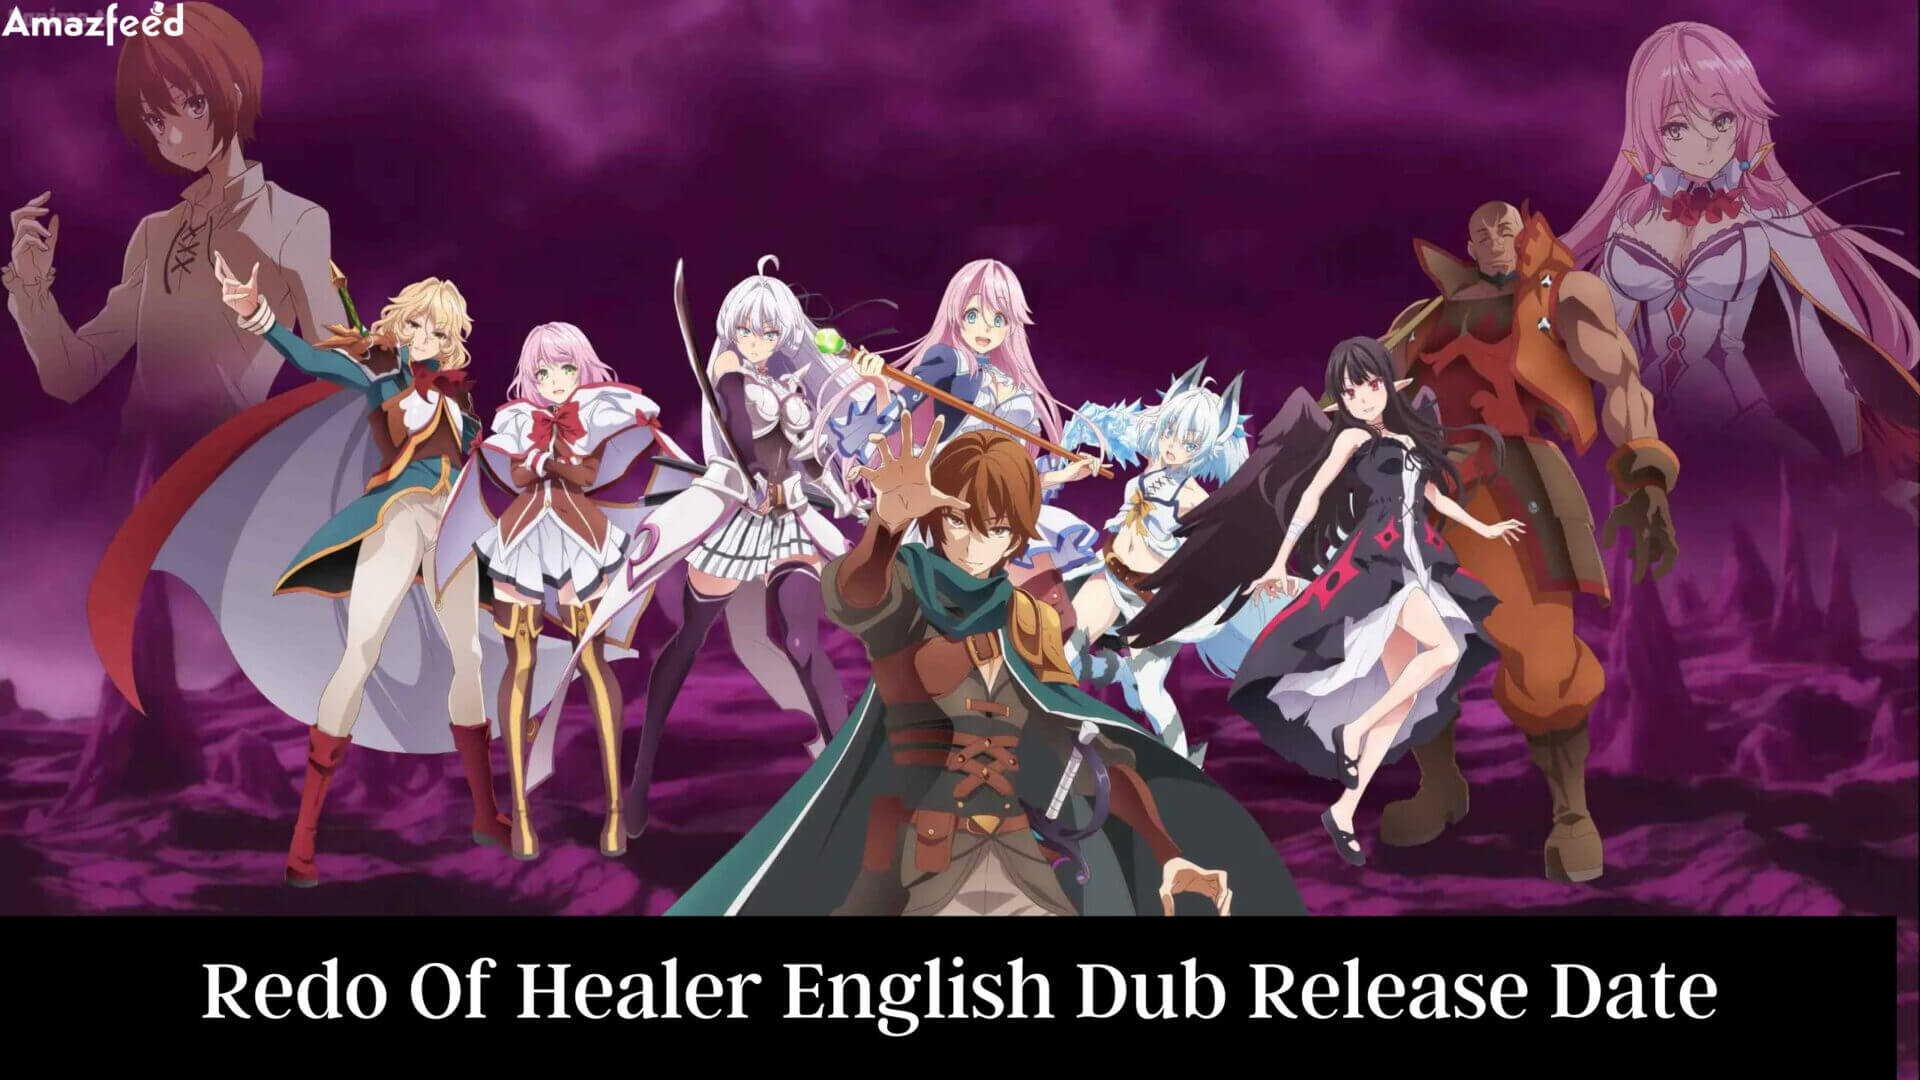 Redo of Healer Episode 1 Release Date, Watch English Dub Online